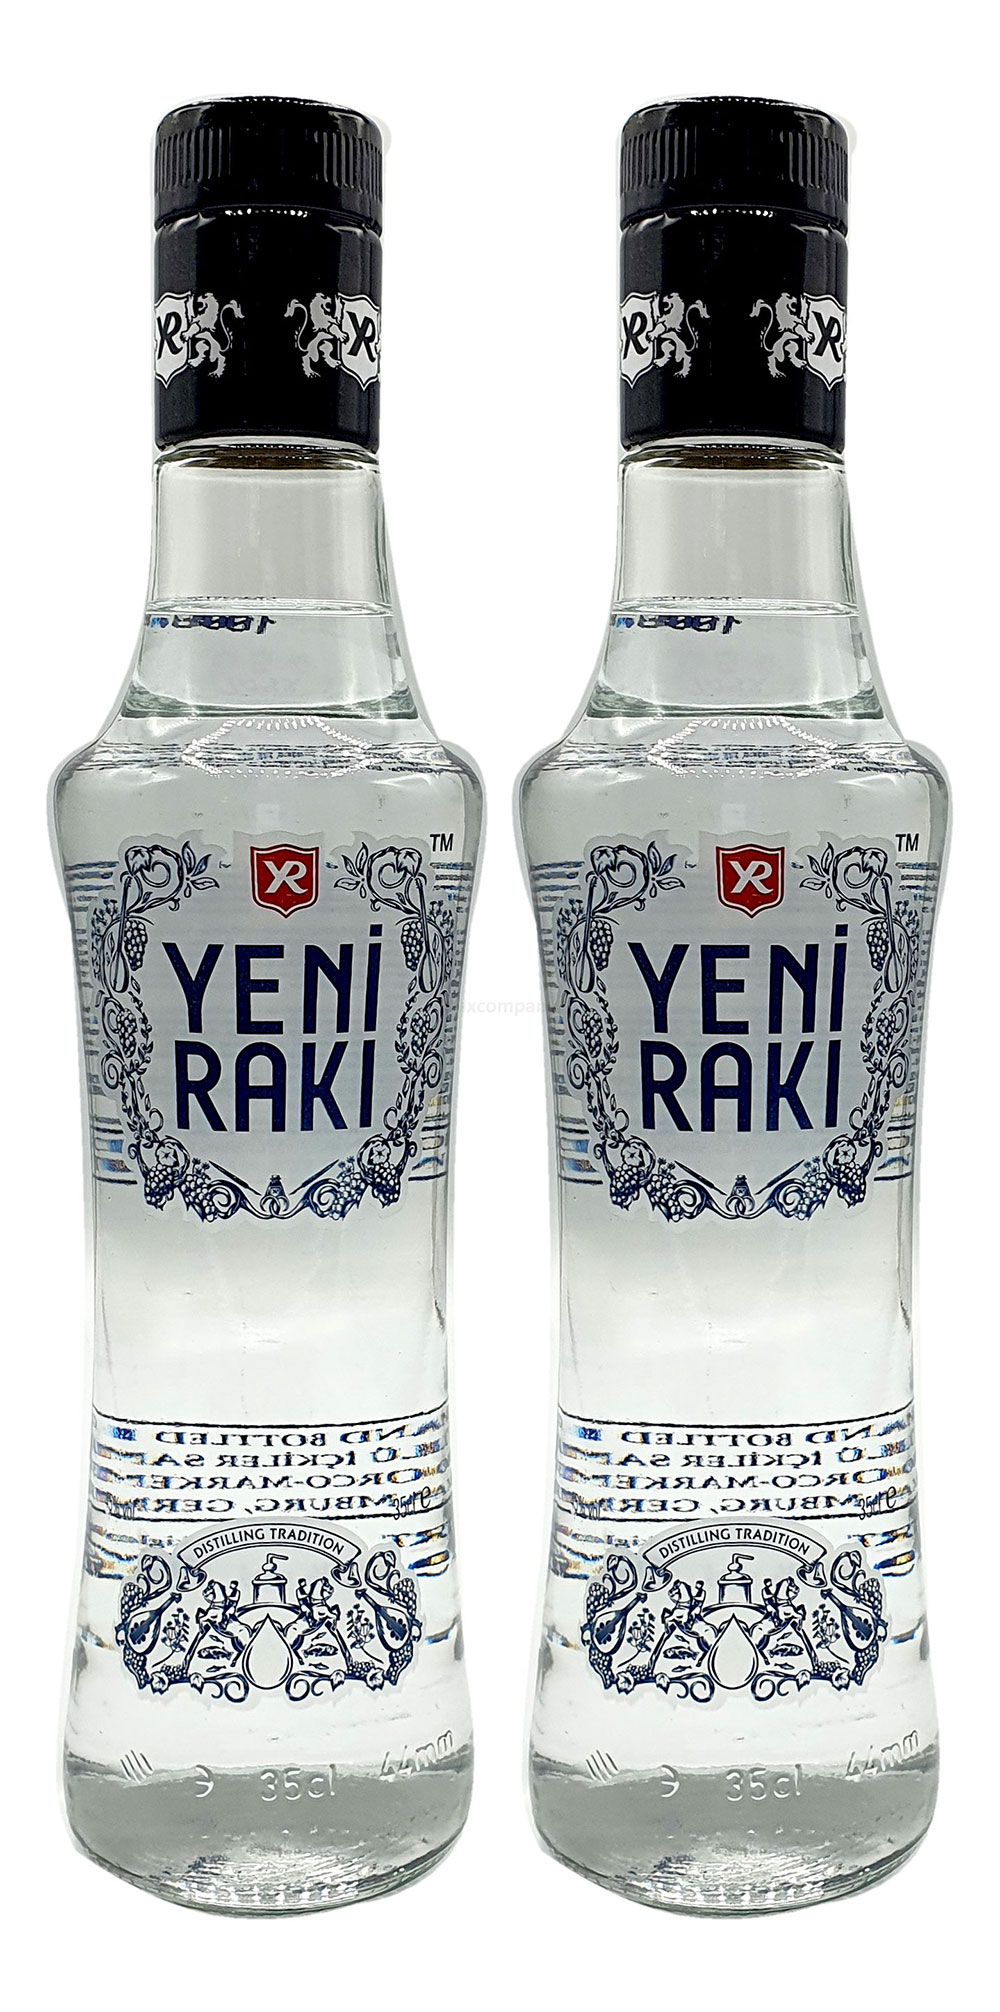 Yeni Raki - 2er Set Türkische Spirituose 0,35L (45% Vol)